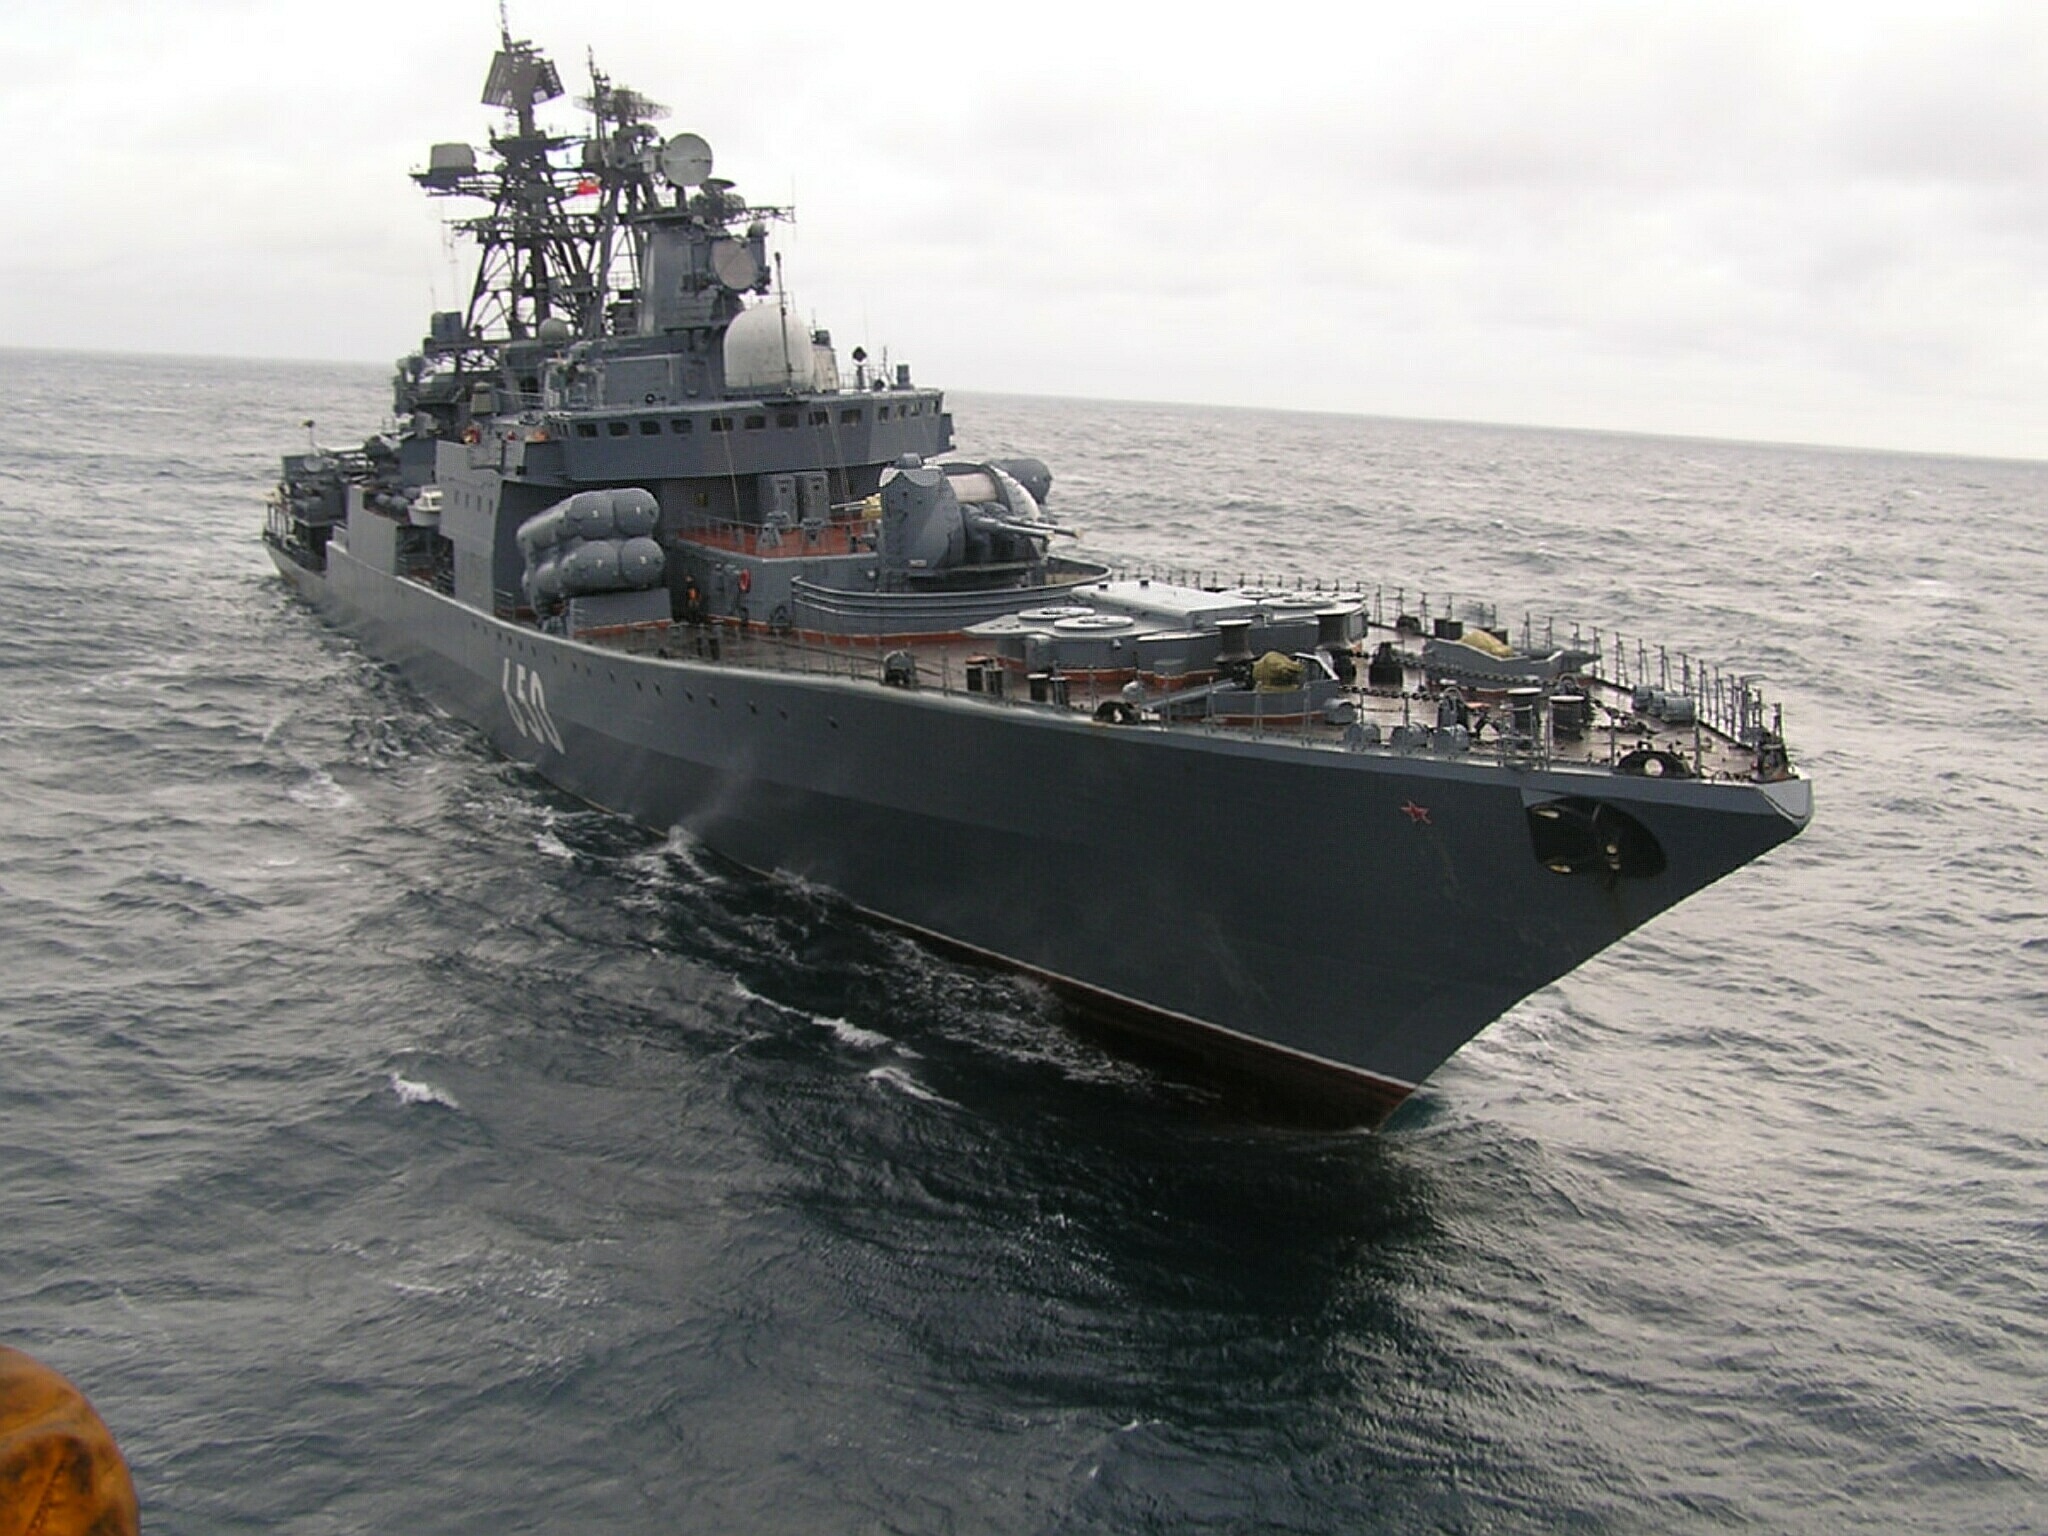 Адмирал чабаненко фото большой противолодочный корабль